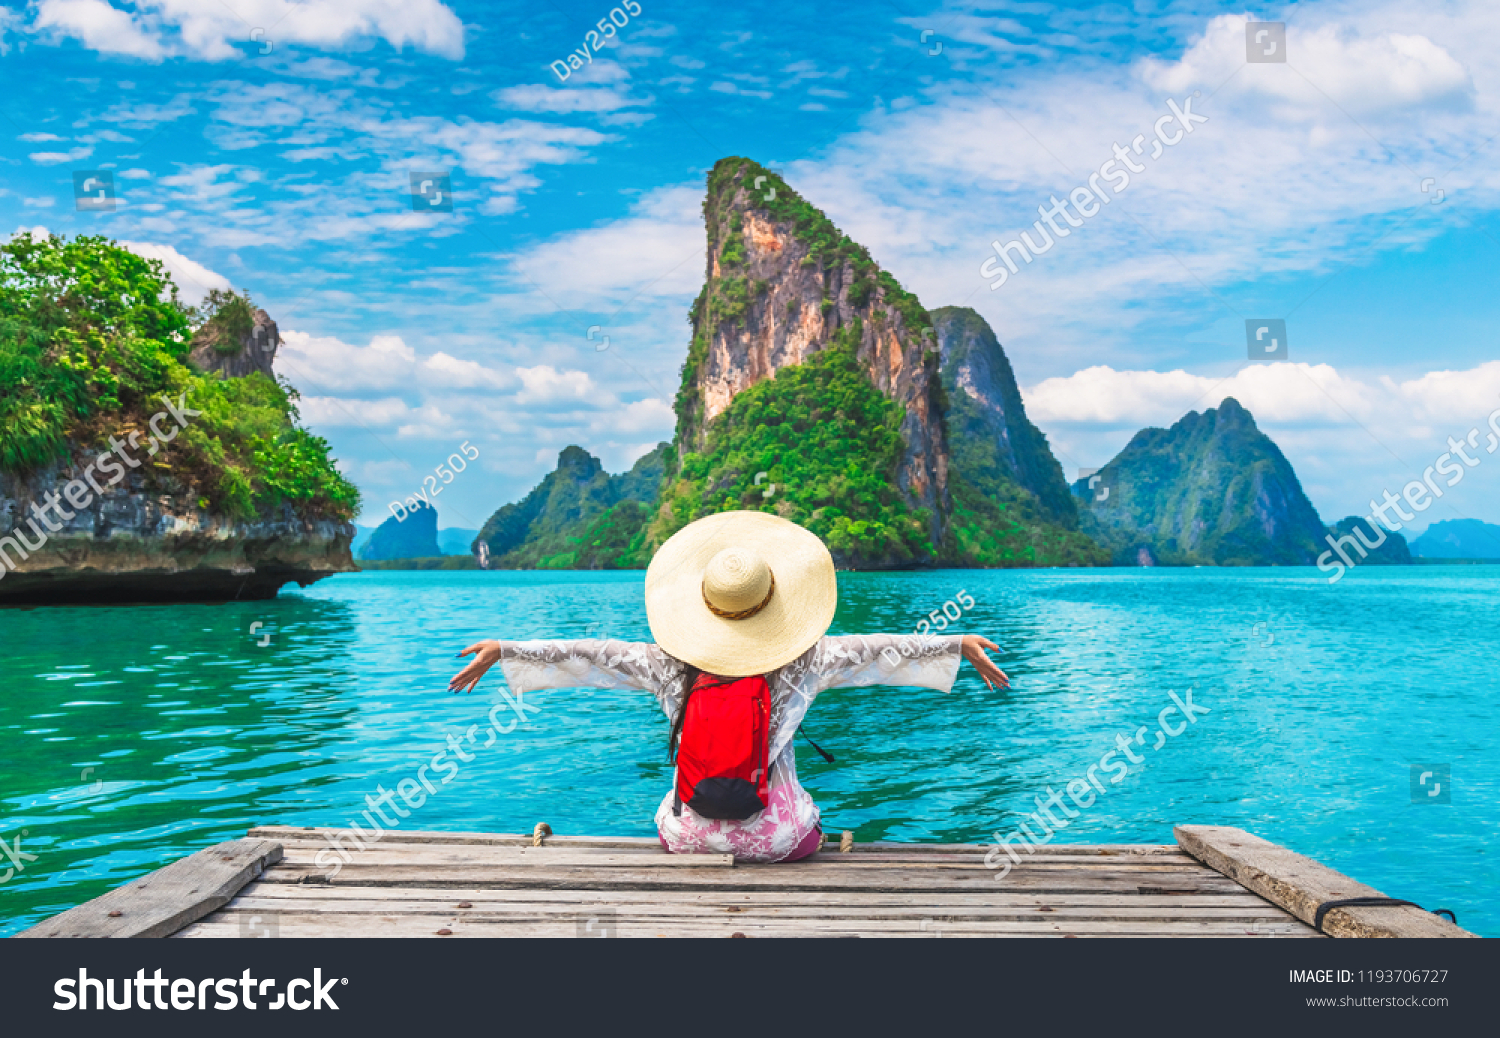 Traveler woman joy fun relaxing on wood bridge looking beautiful destination island, Phang-Nga bay, Travel adventure Thailand, Tourism natural scenic landscape Asia, Tourist on summer holiday vacation #1193706727